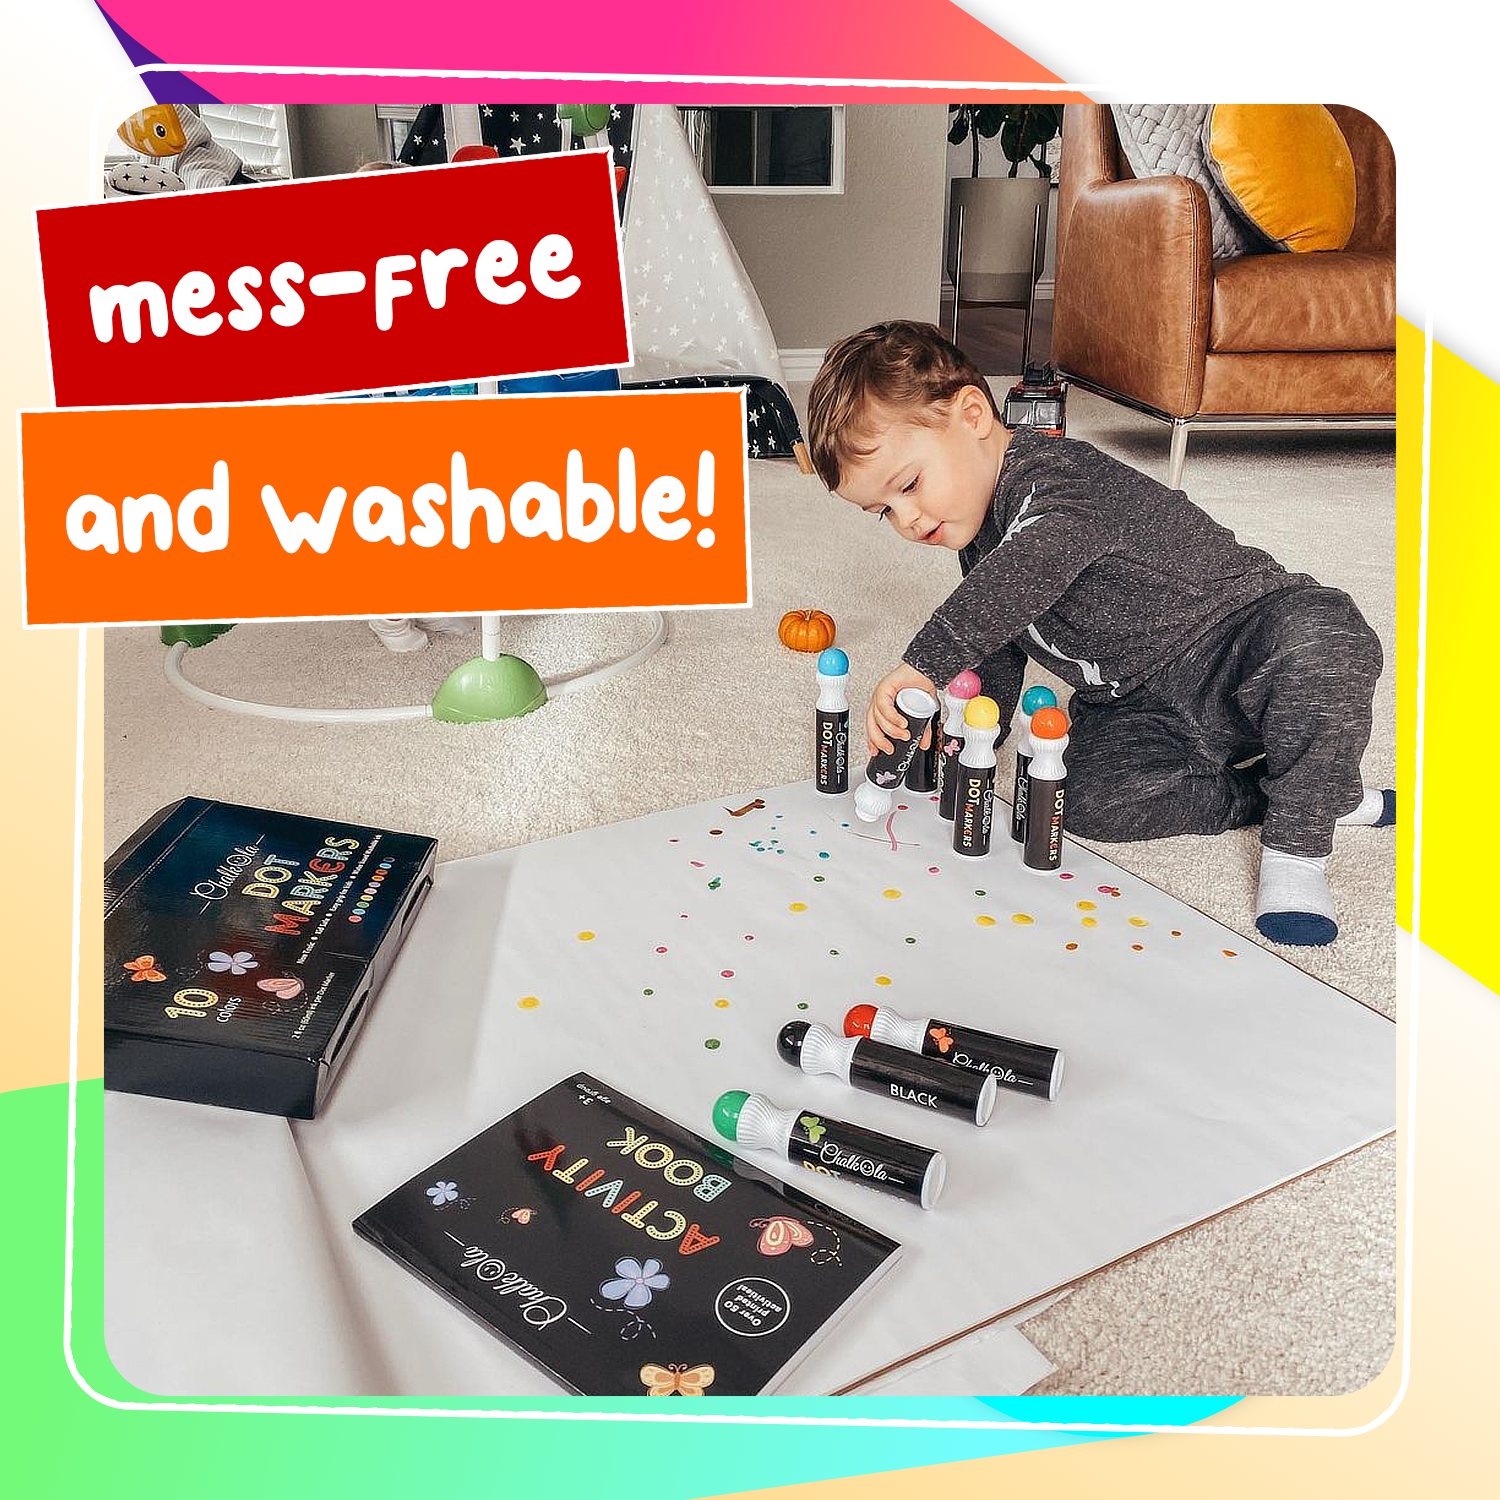 Bundle for Kids: 10 Neon + 8 Shimmer Washable Dot Markers - Chalkola Art  Supply